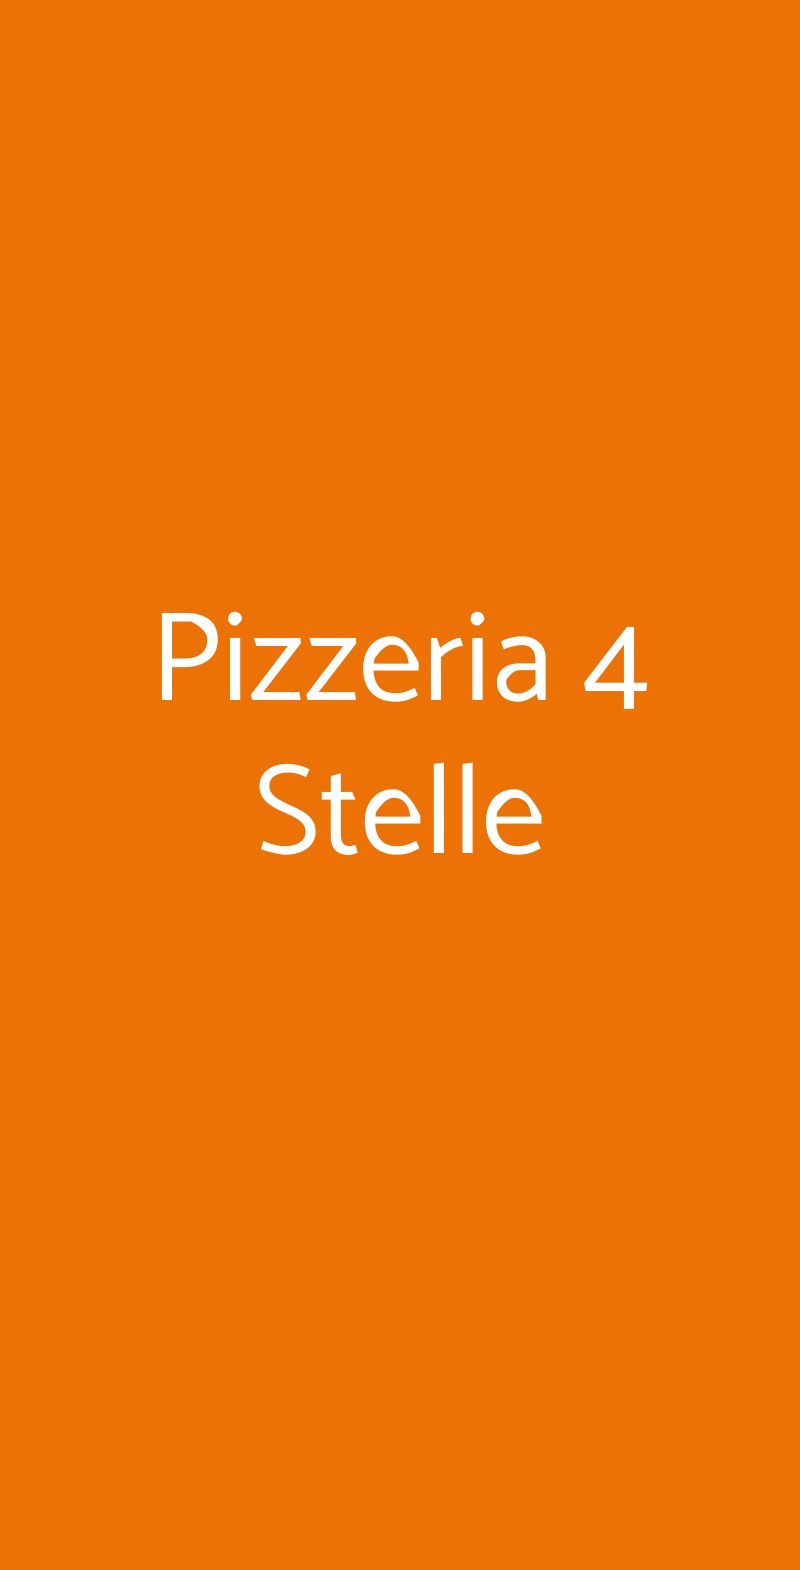 Pizzeria 4 Stelle Milano menù 1 pagina